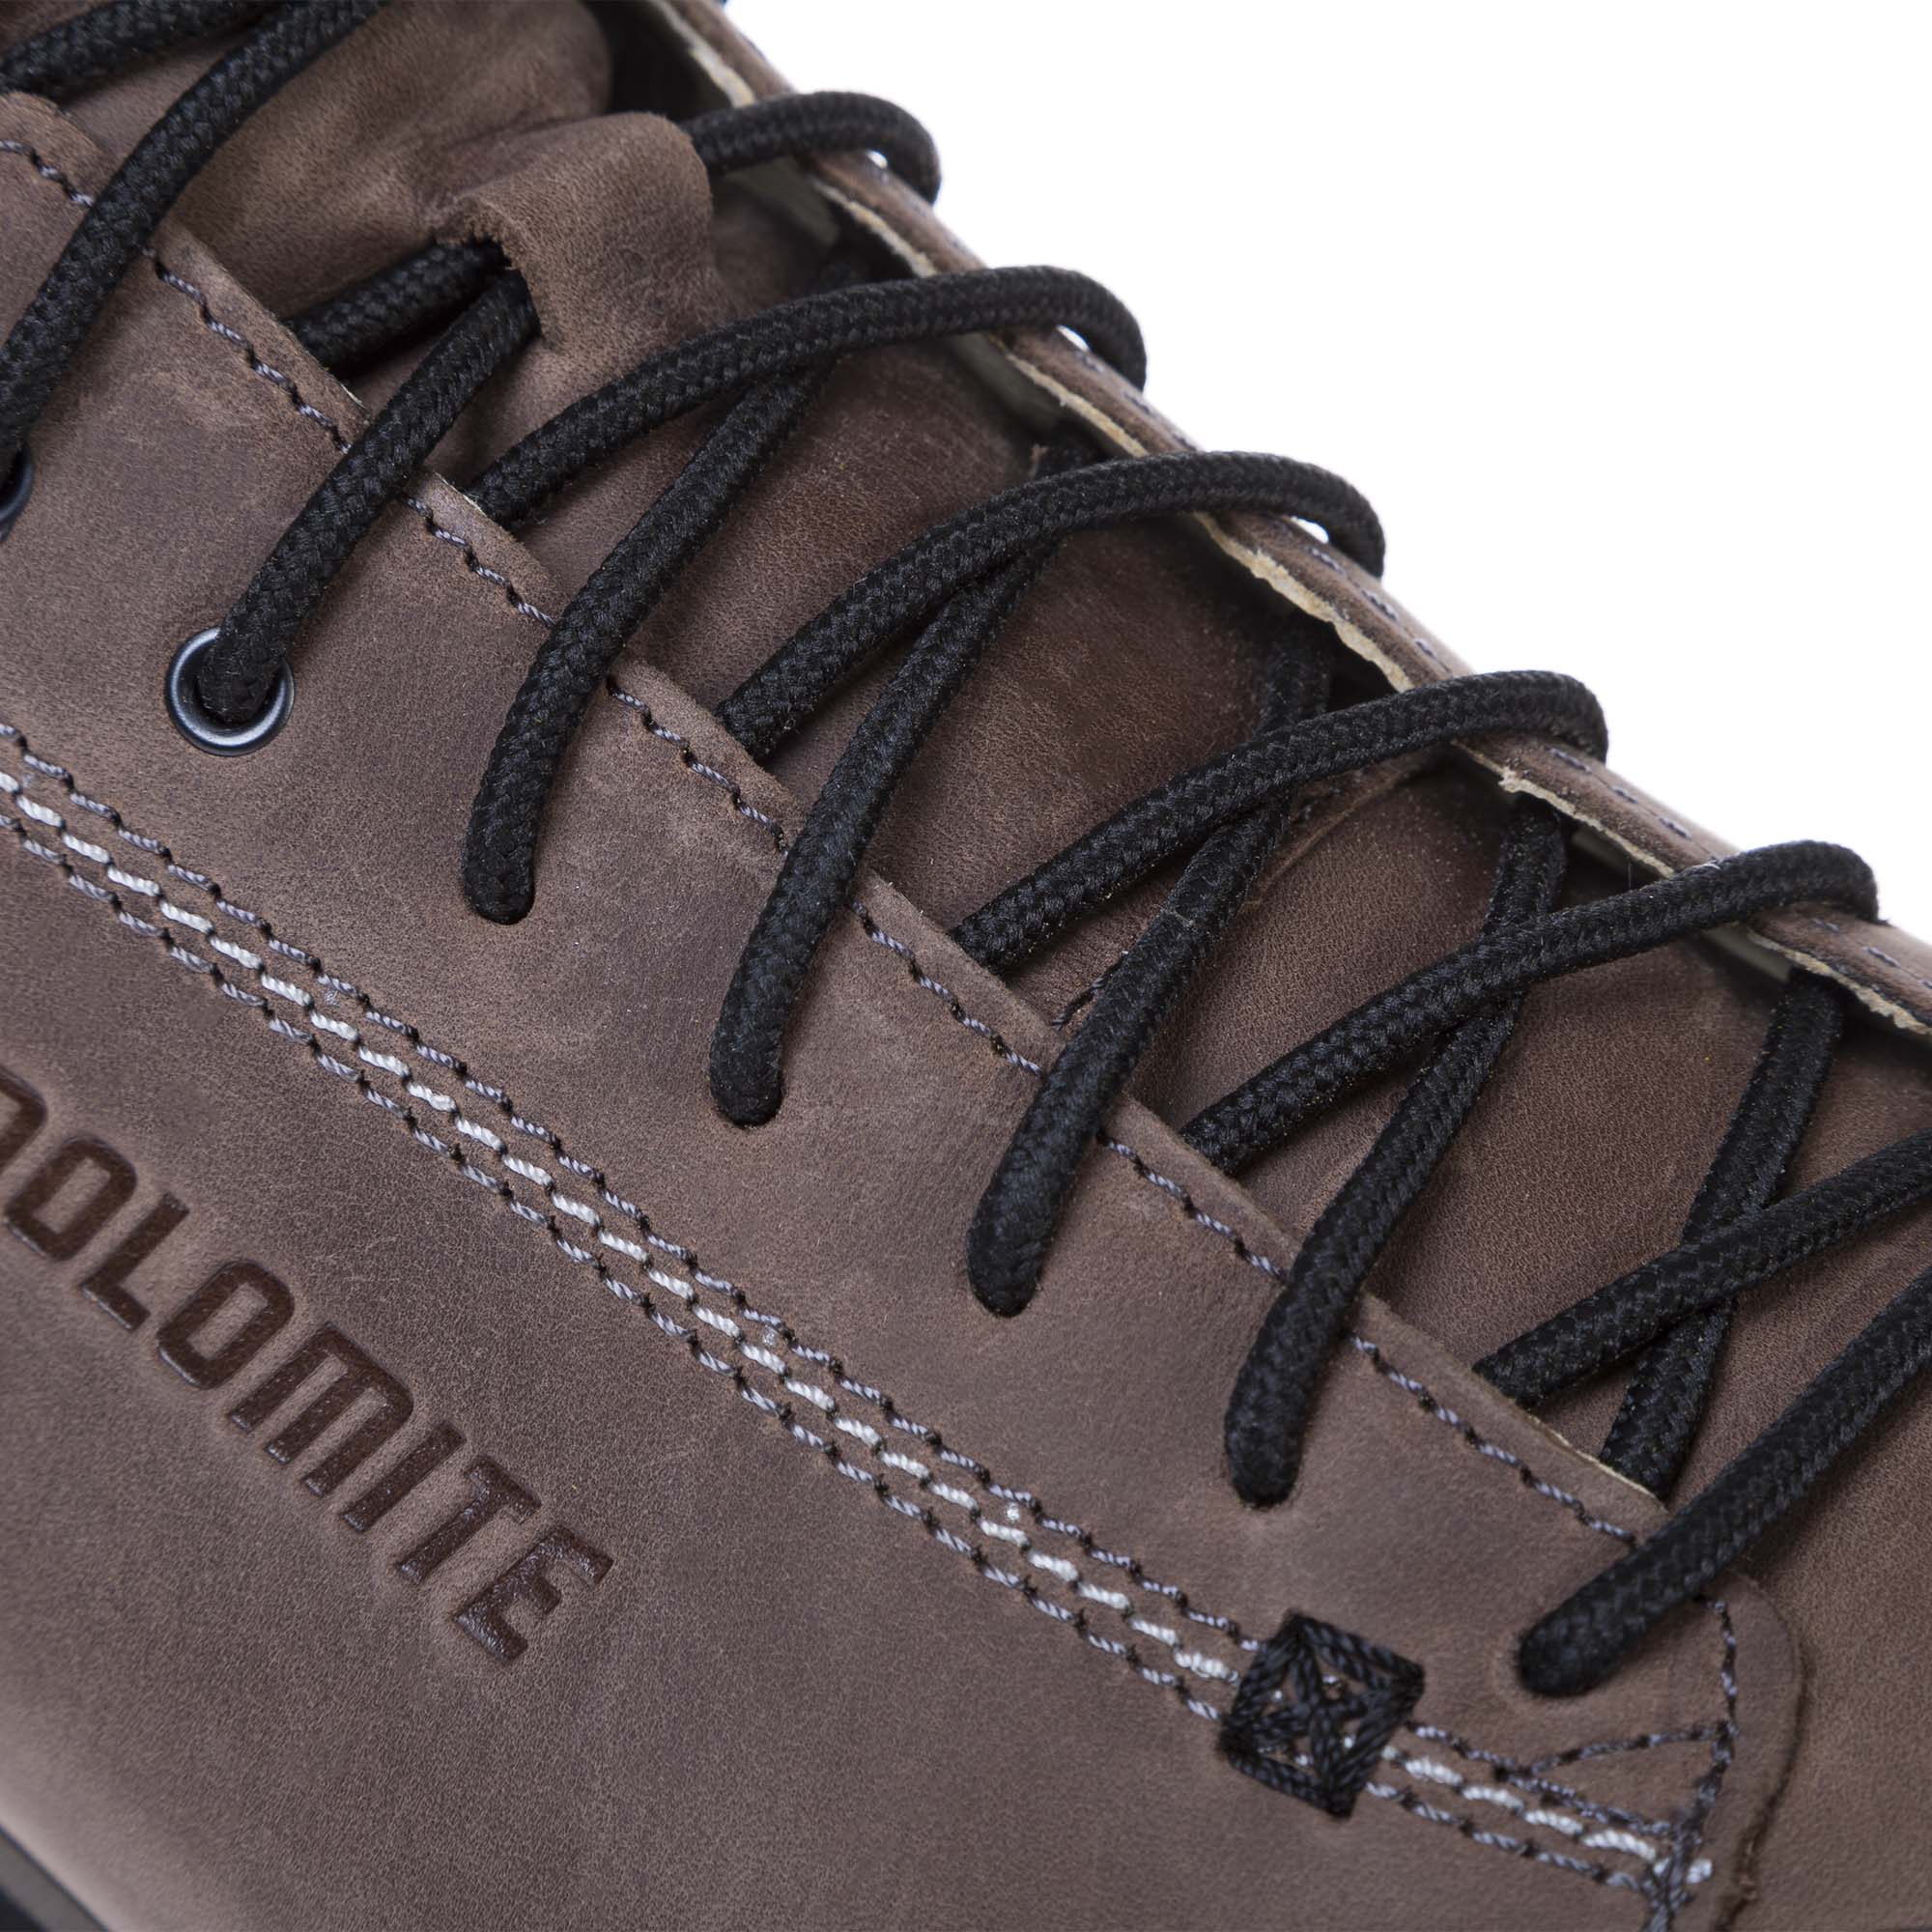 Dolomite 54 High FG GTX Hiking/Walking Shoes